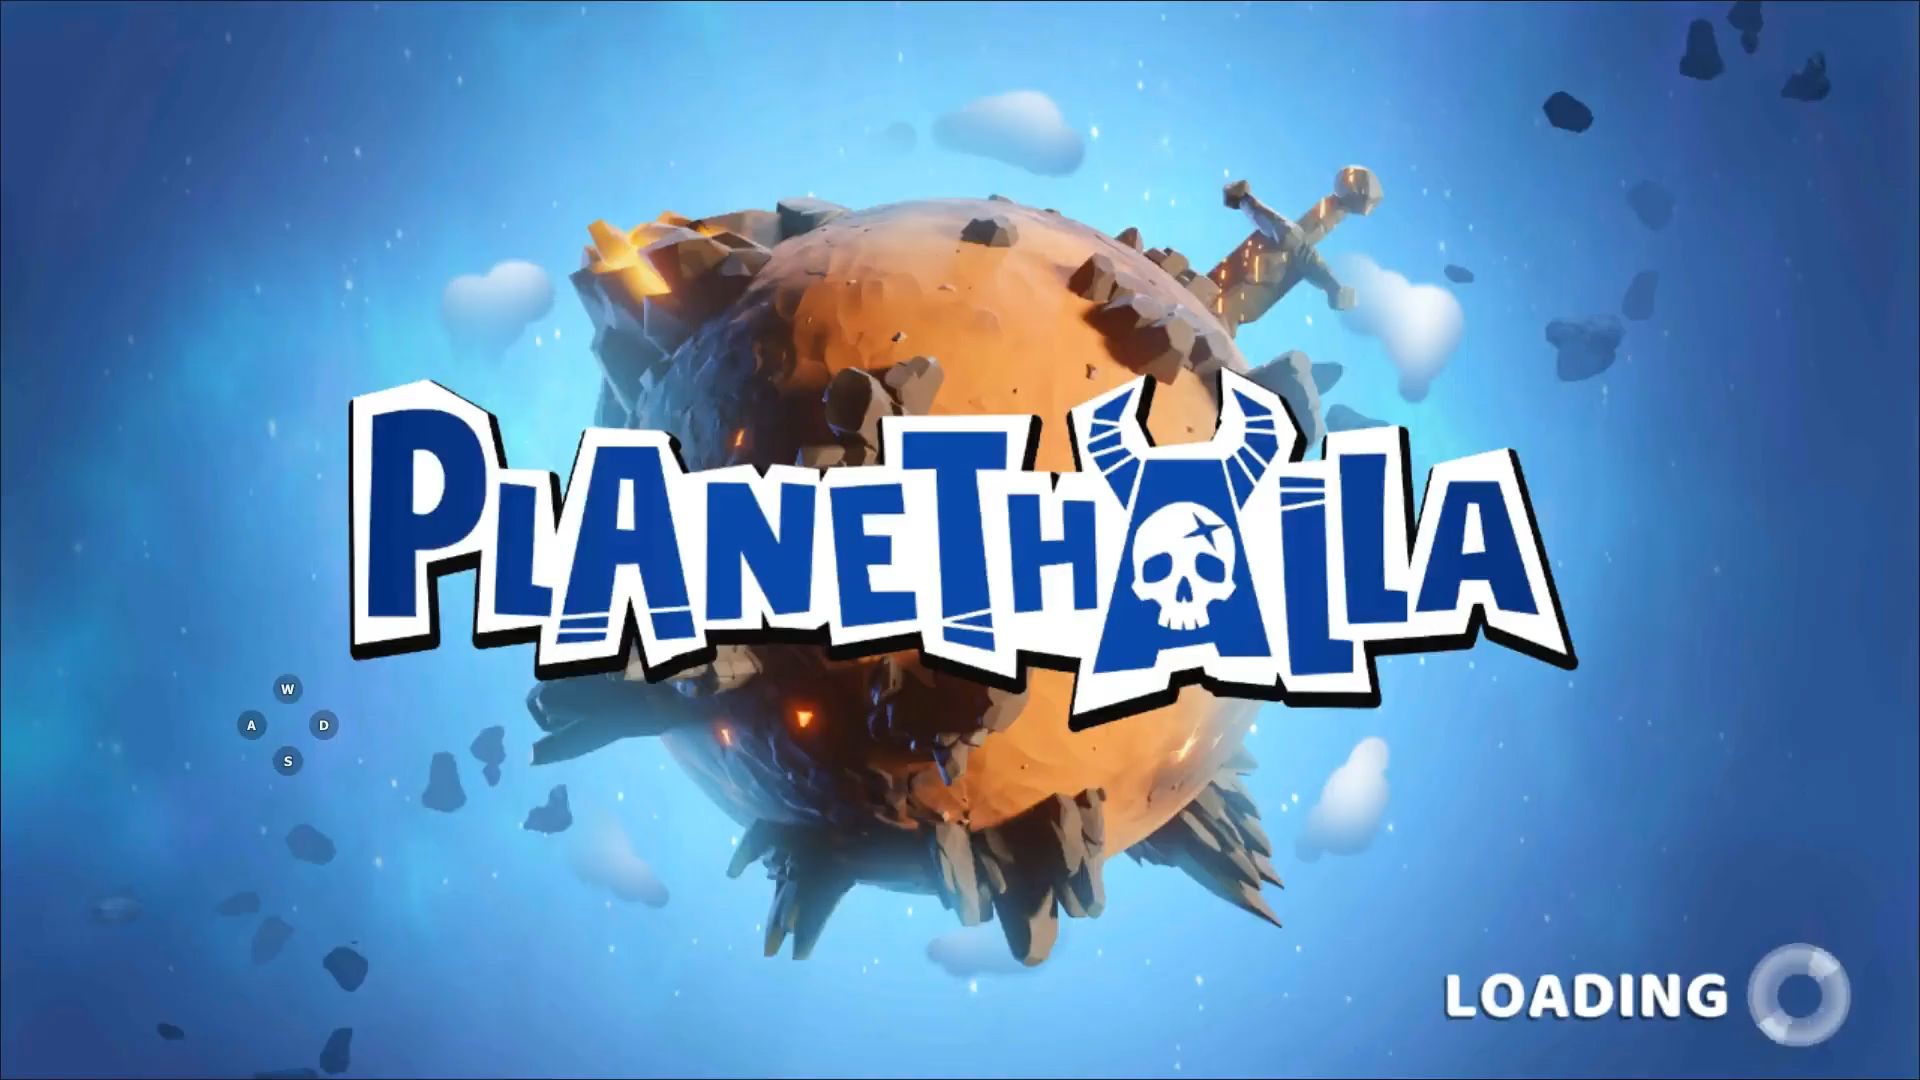 Planethalla